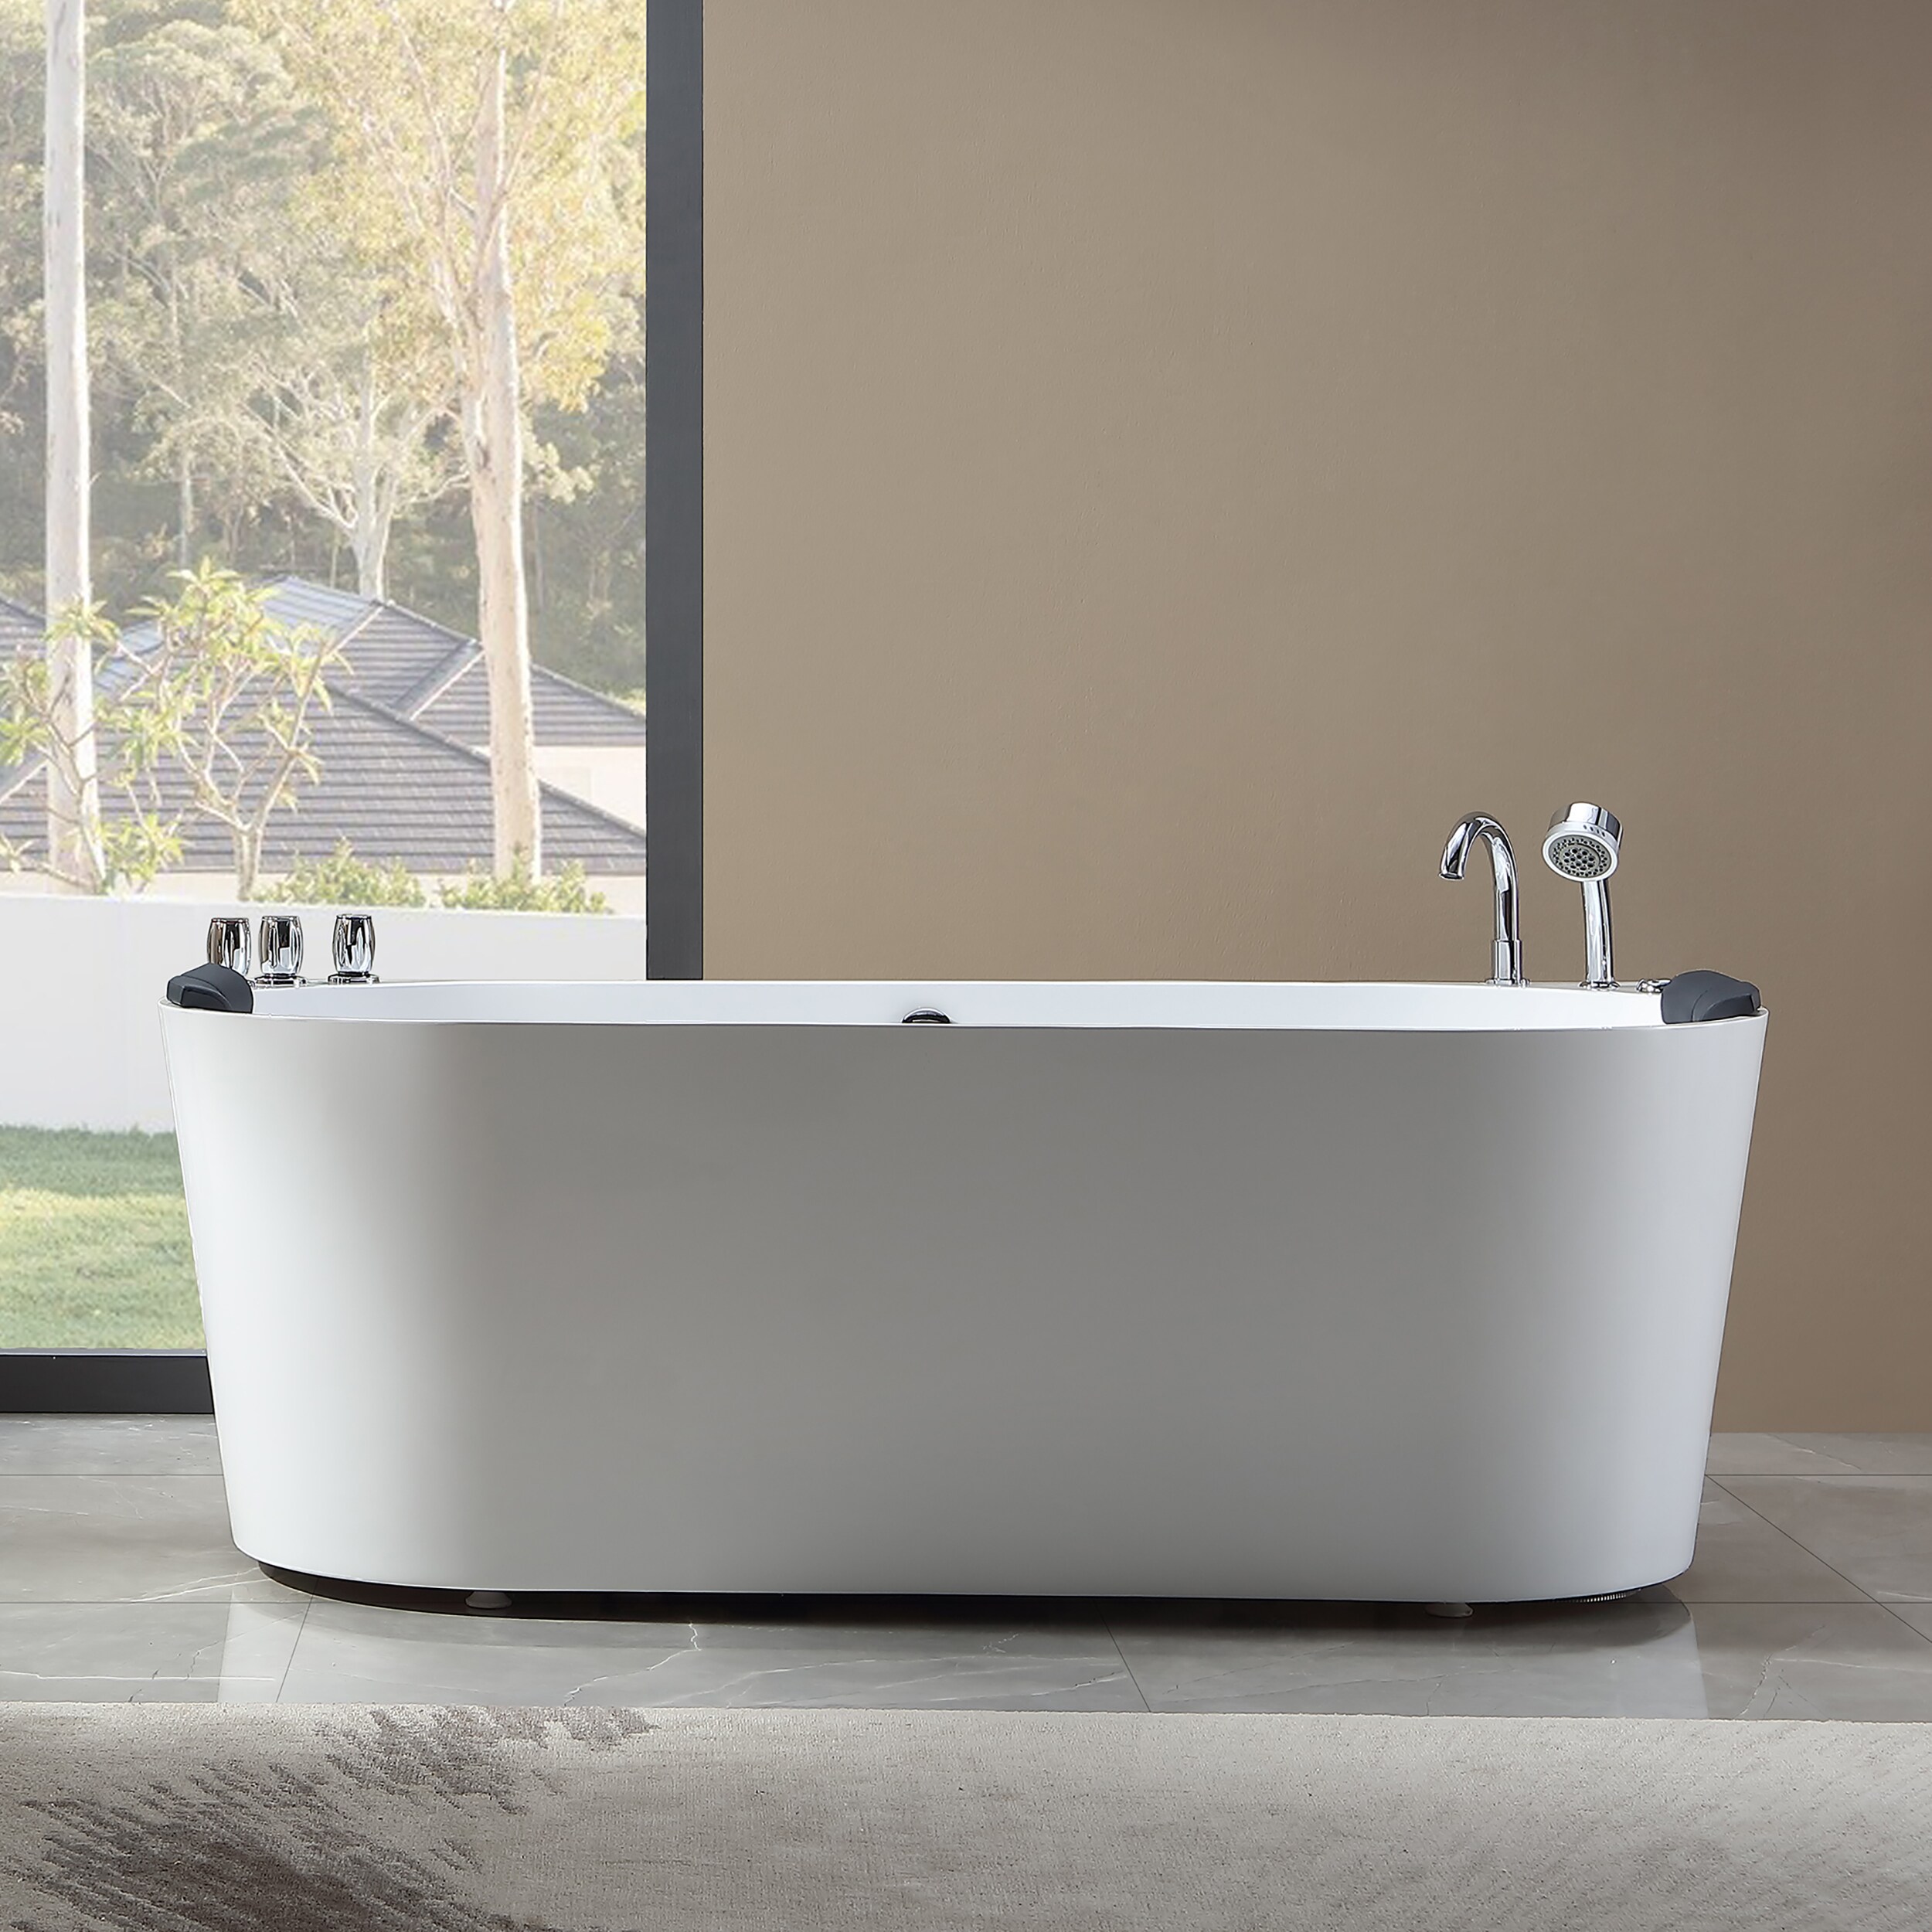 Empava 67 Inch Freestanding Whirlpool Bathtub with 8 Jets Luxury Acrylic  Massage SPA Soaking Bath Tub Double Ended, White